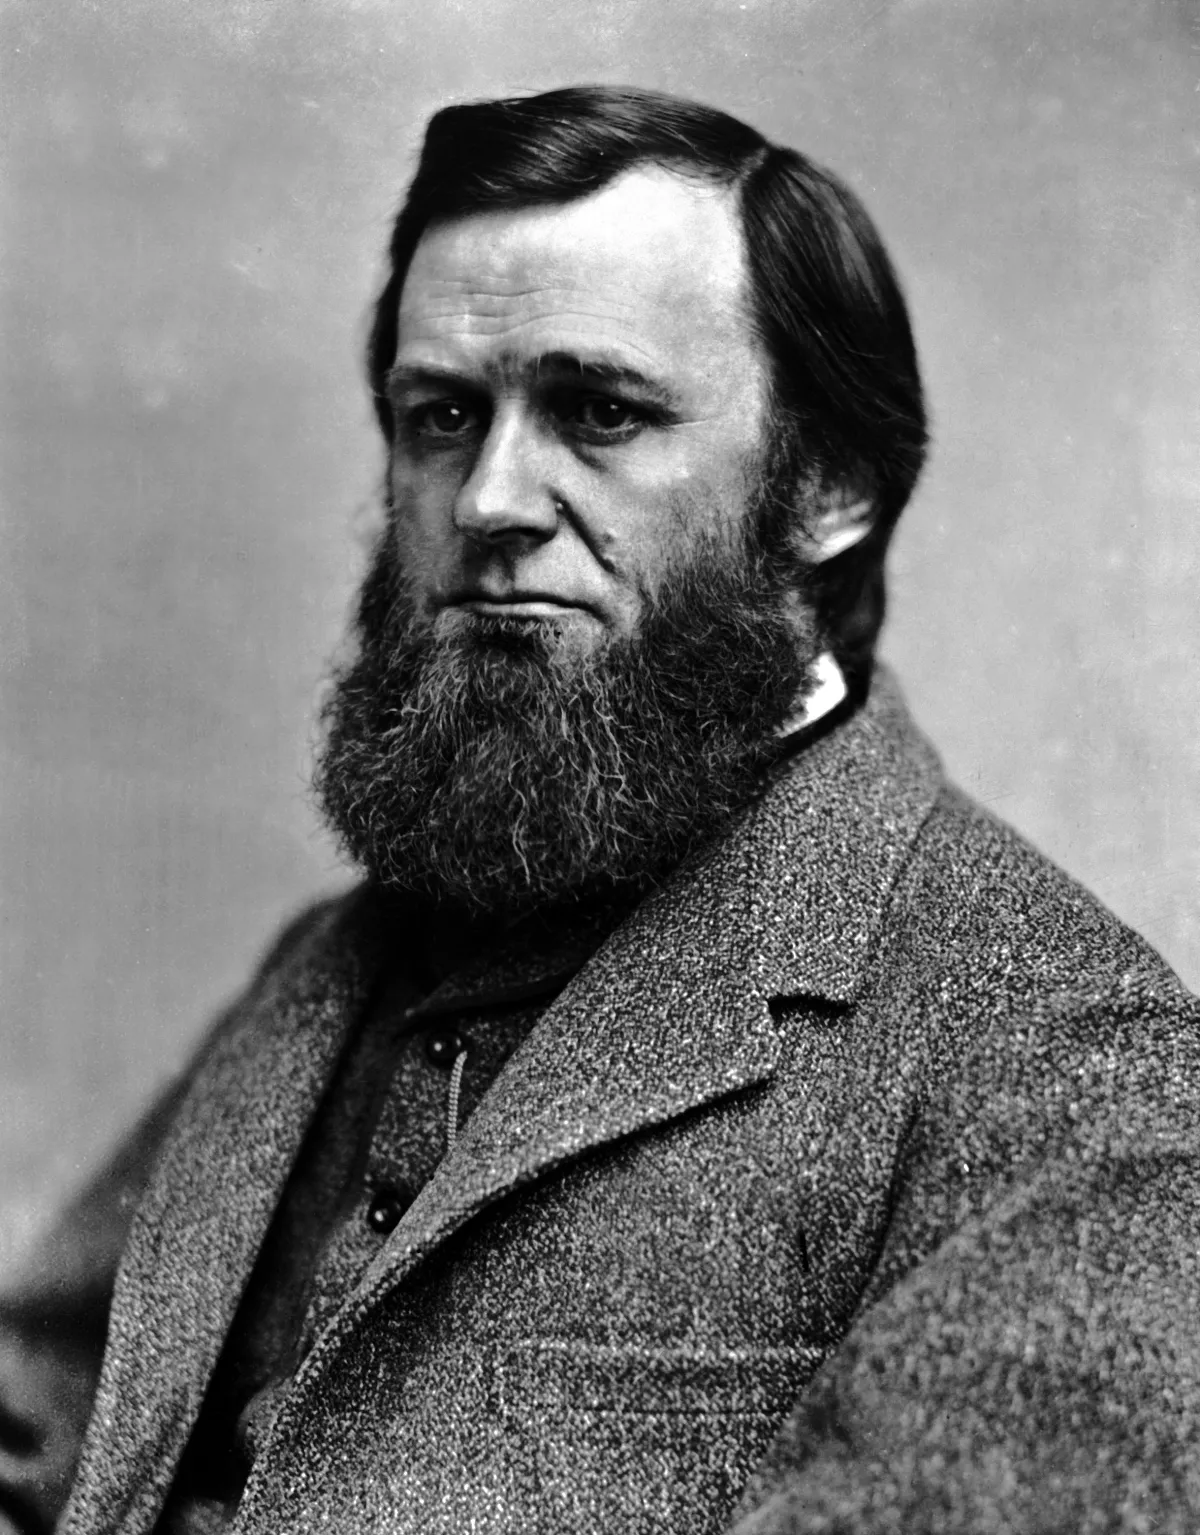 Black and white portrait of Spencer Baird.